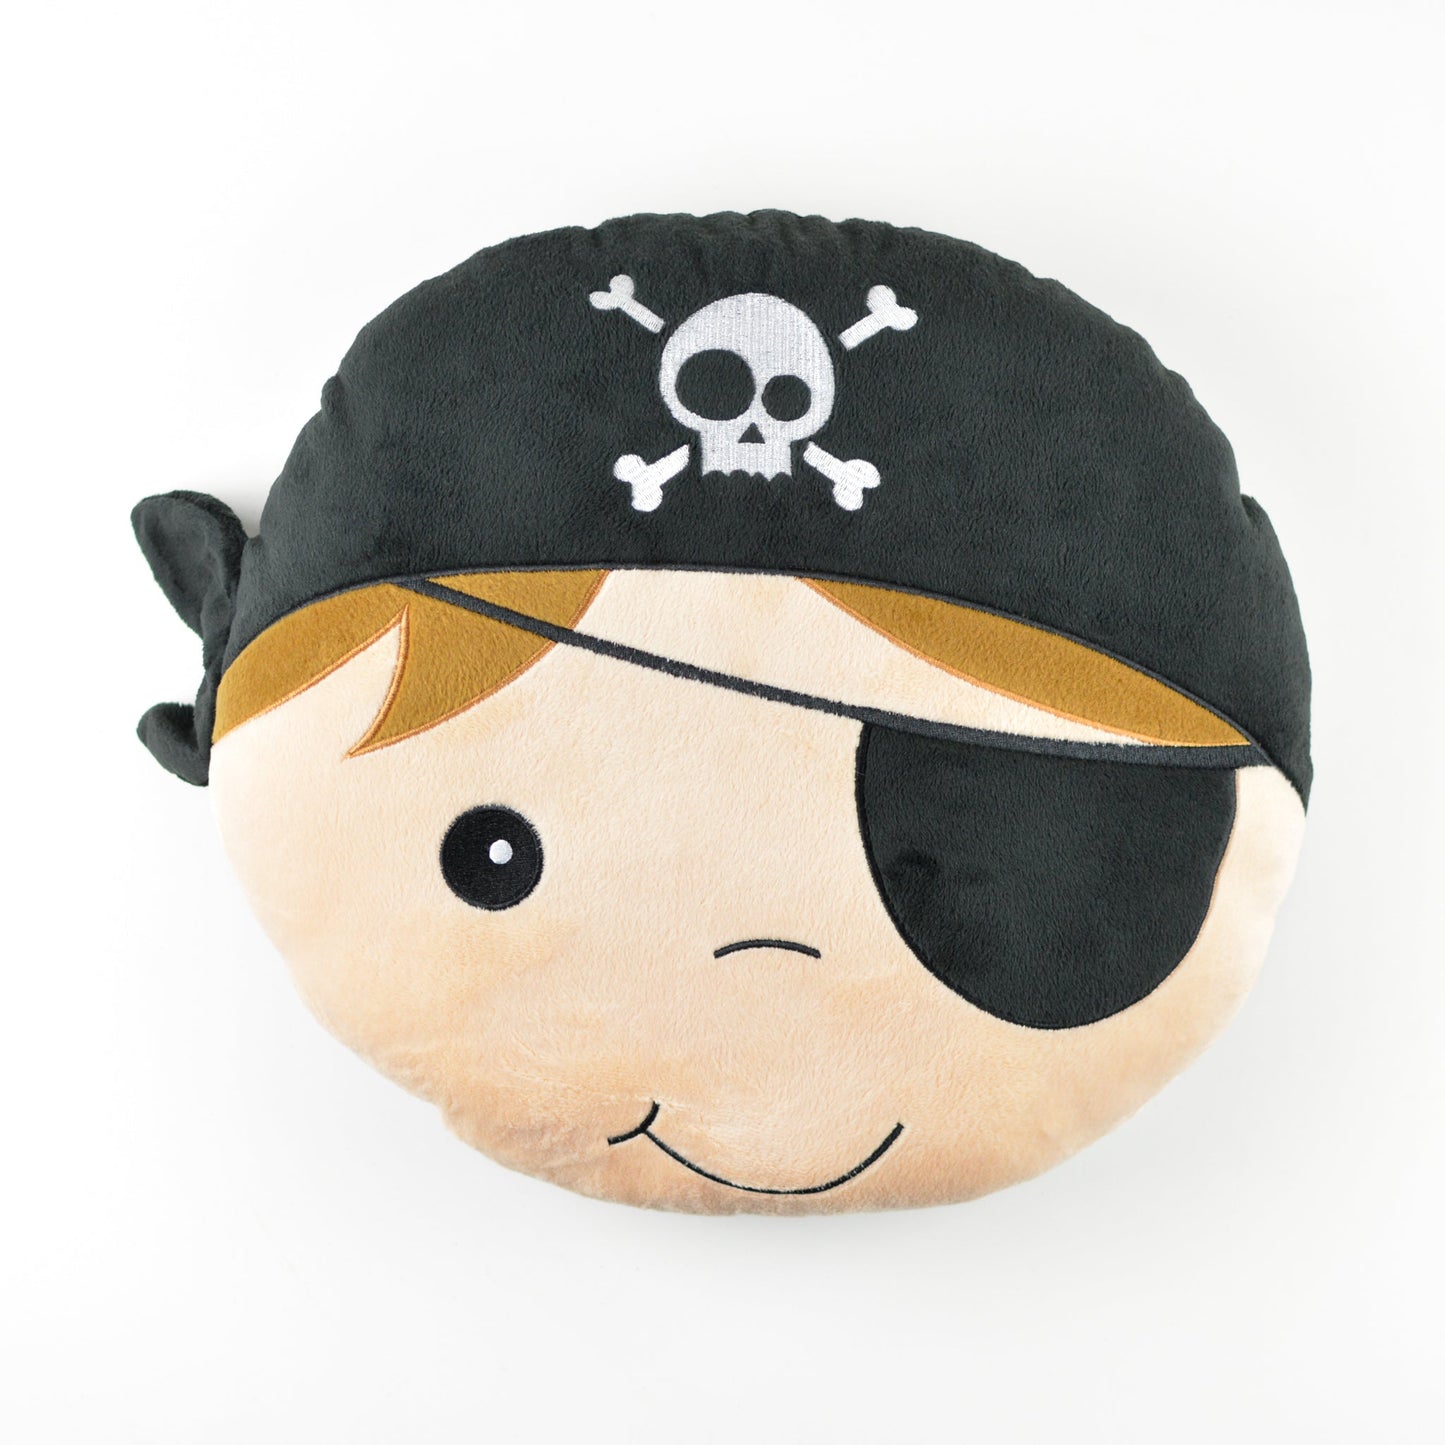 Pirate Head Pillow